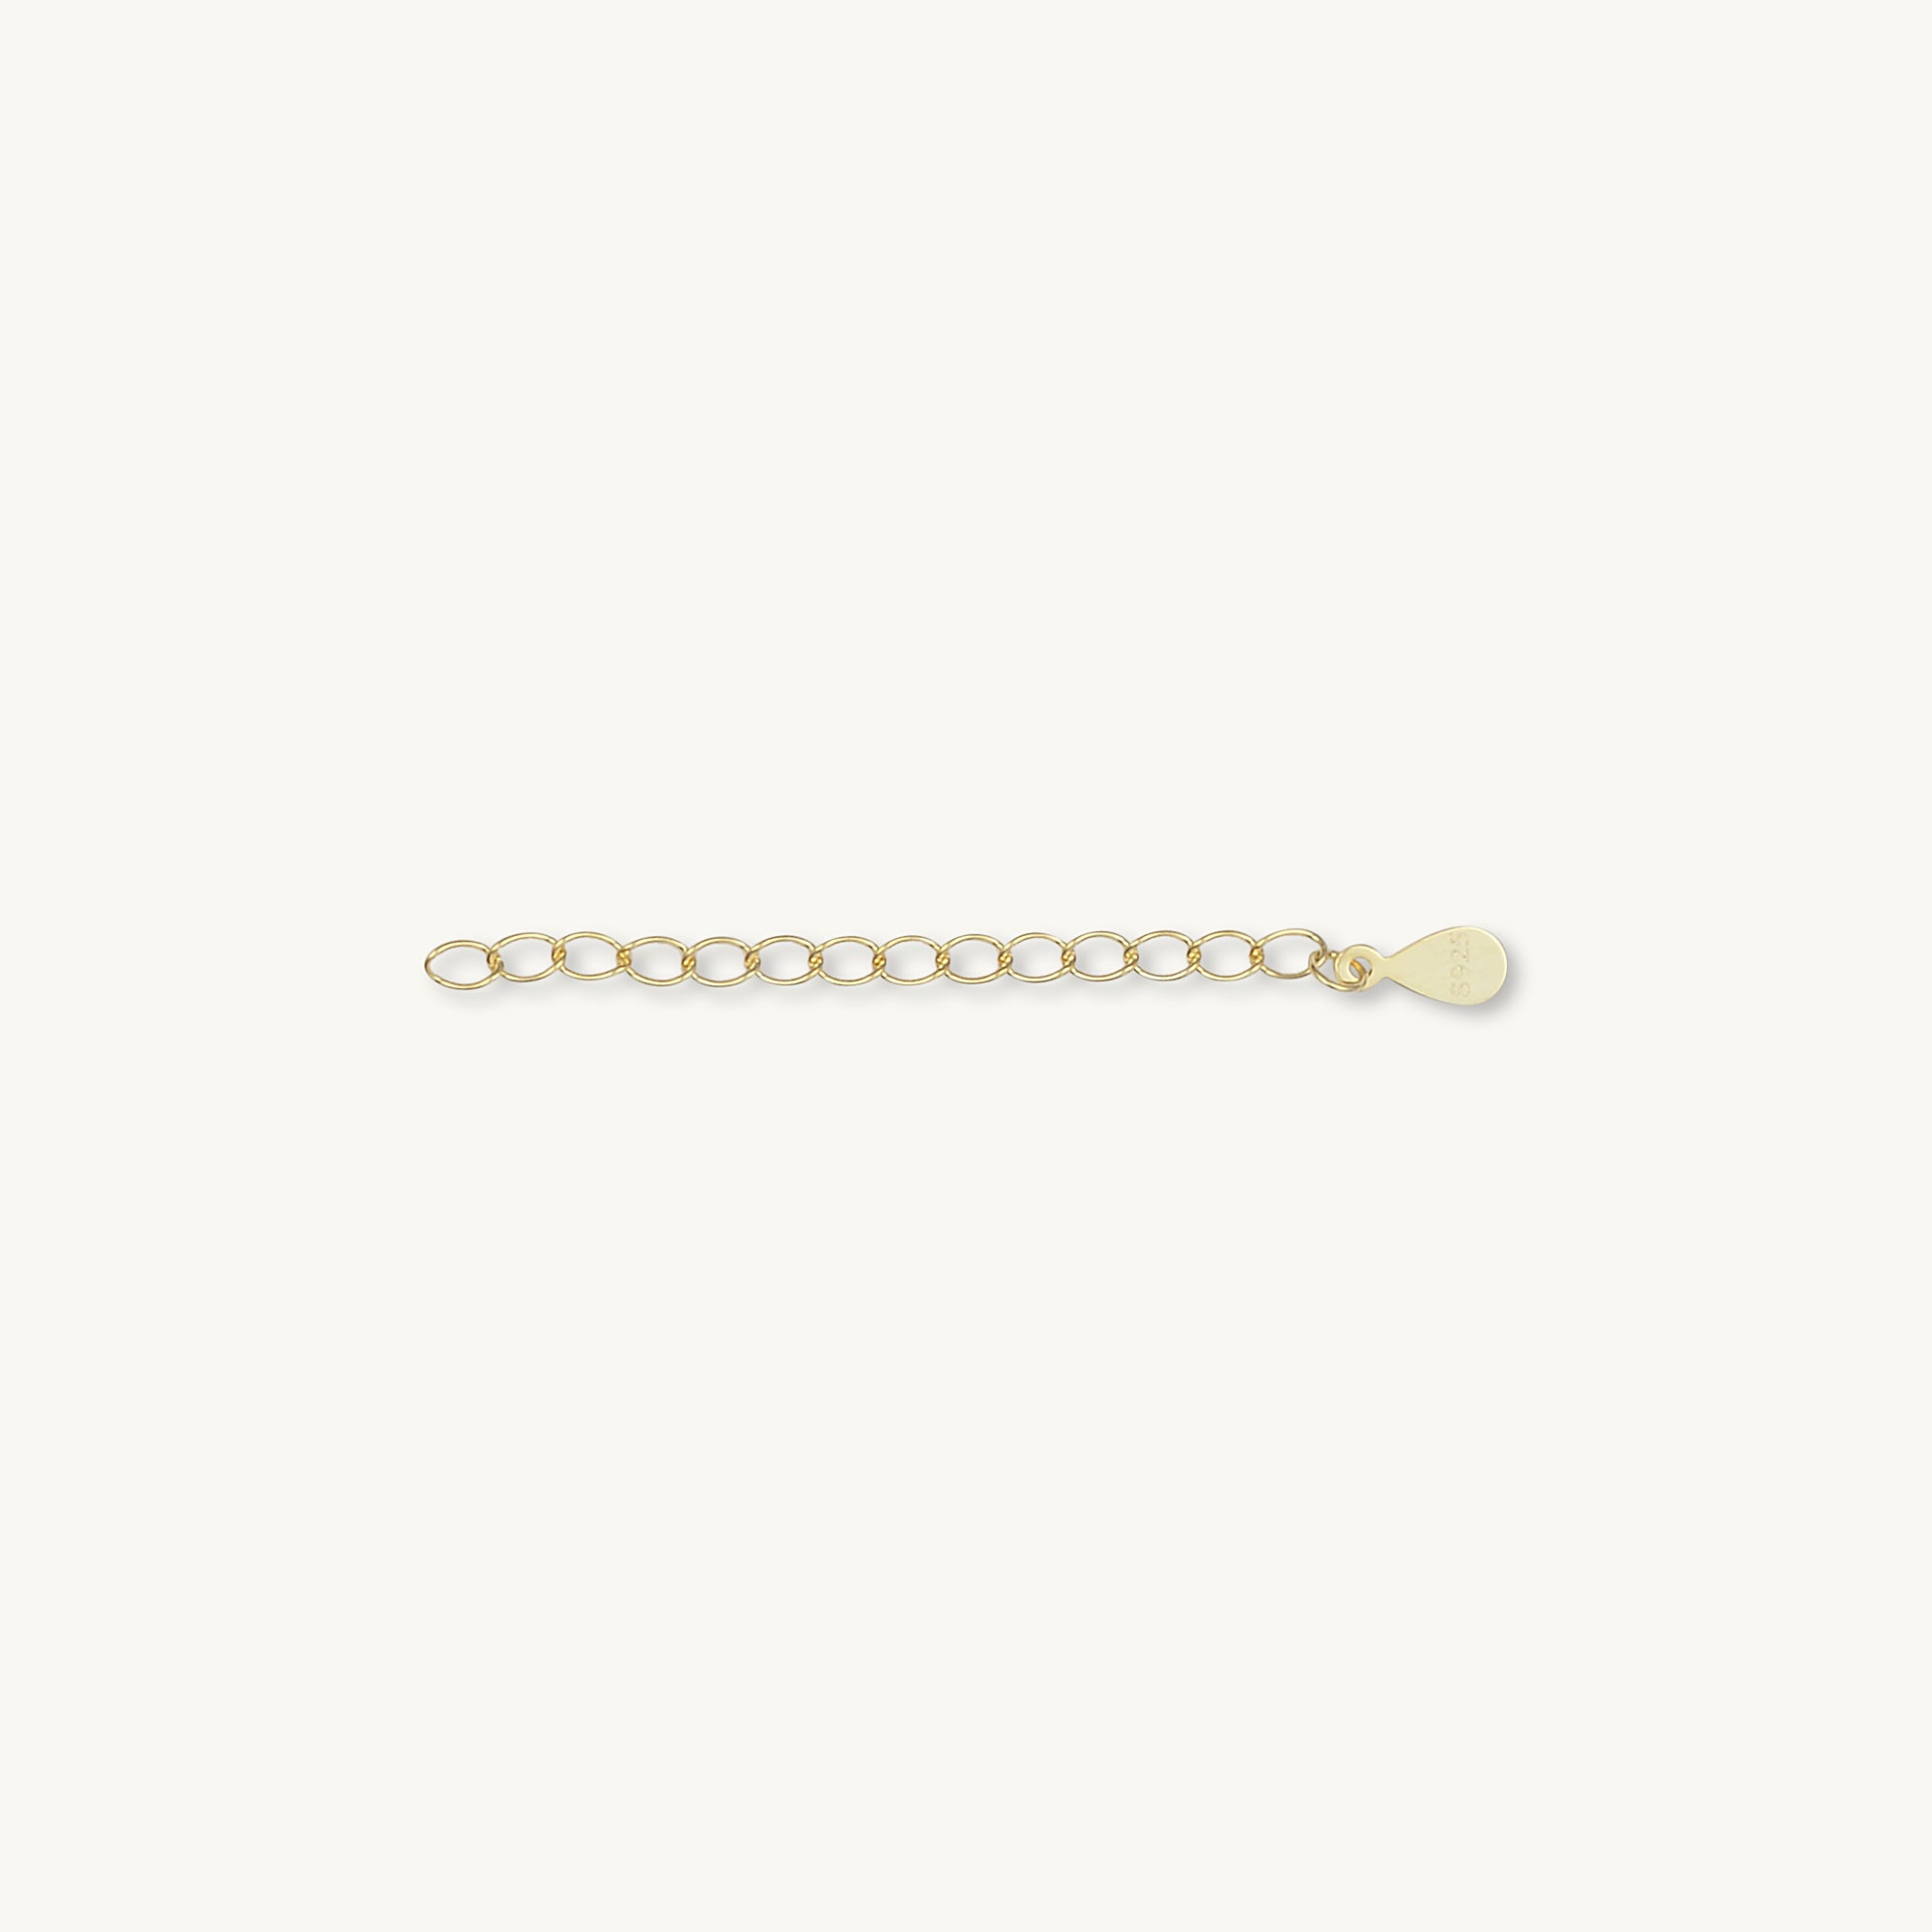 5cm Adjustable Extender Necklace Chain